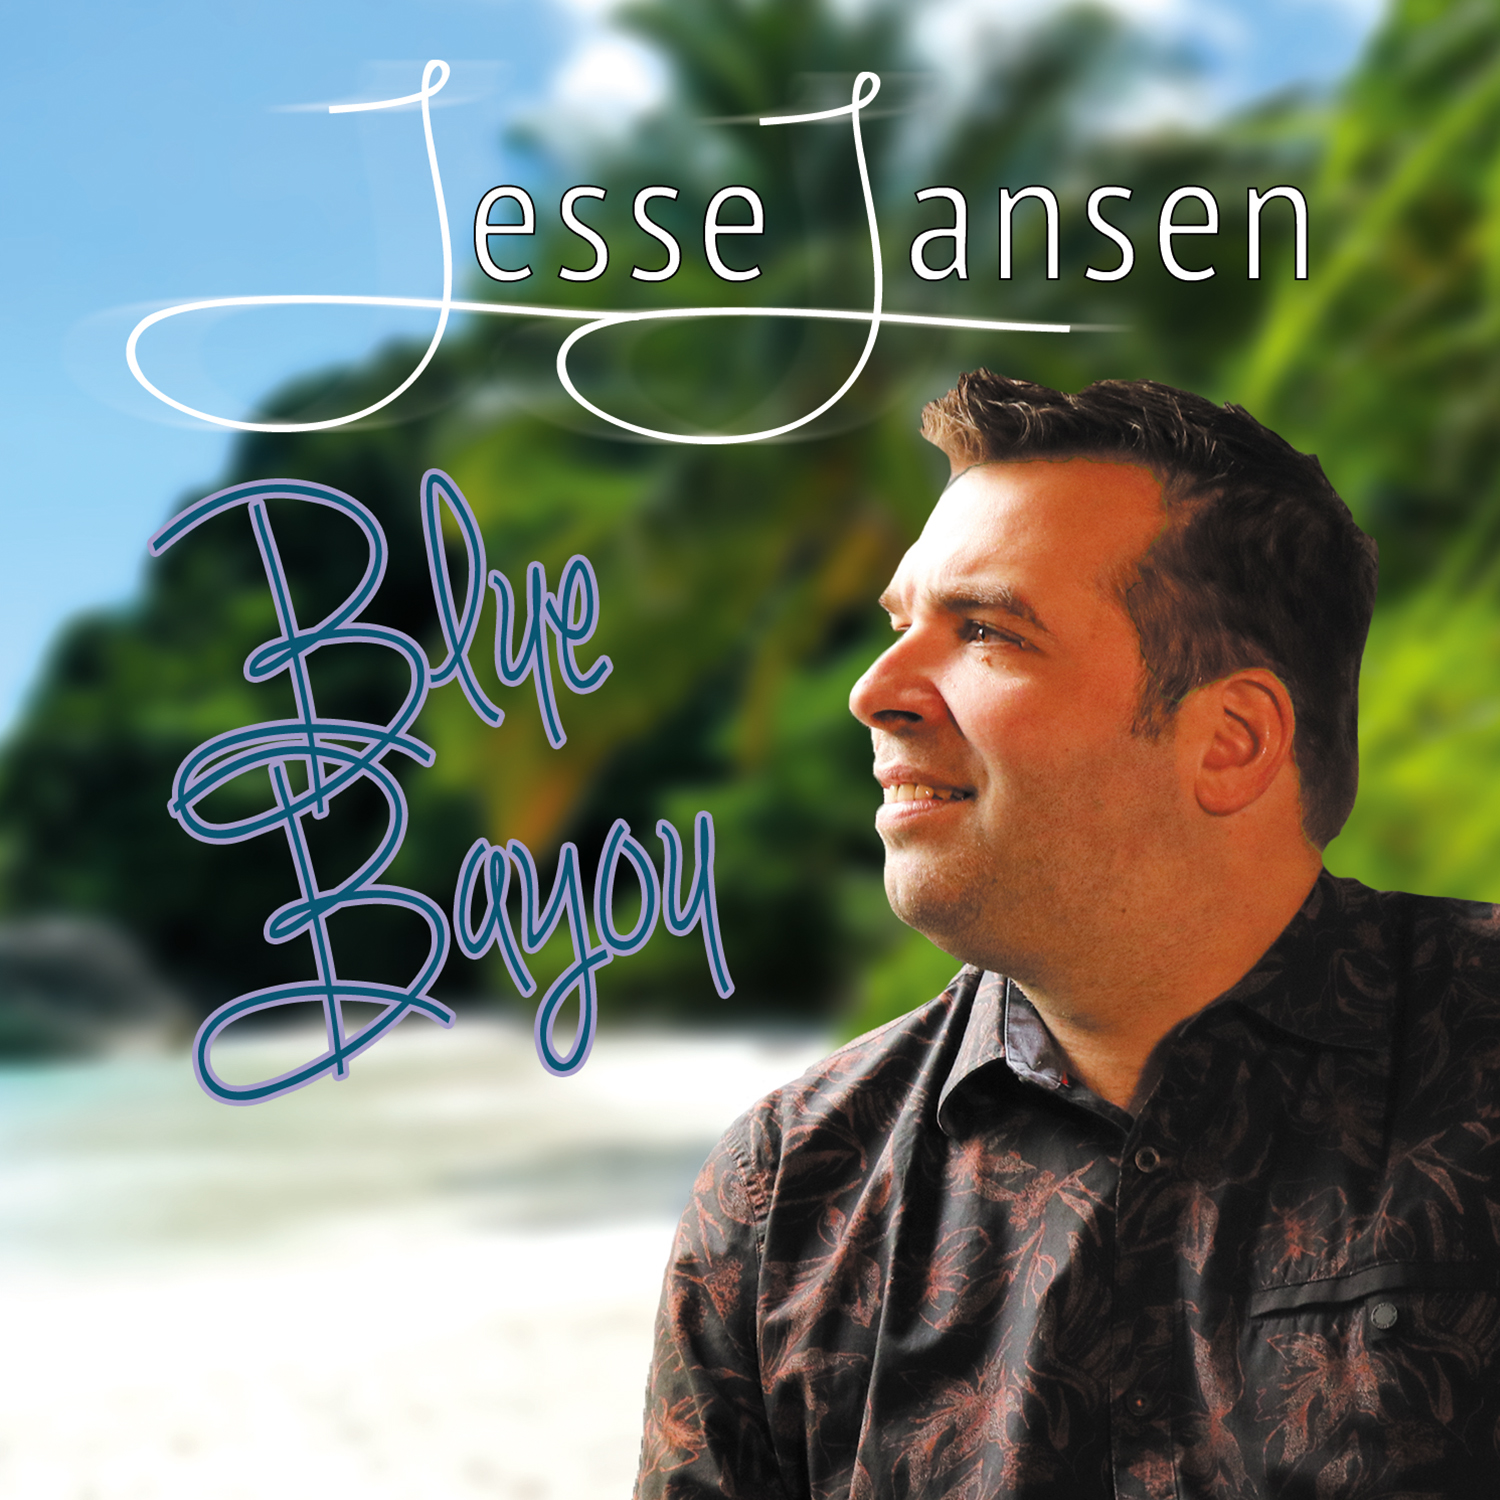 Jesse Jansen - Blue Bayou